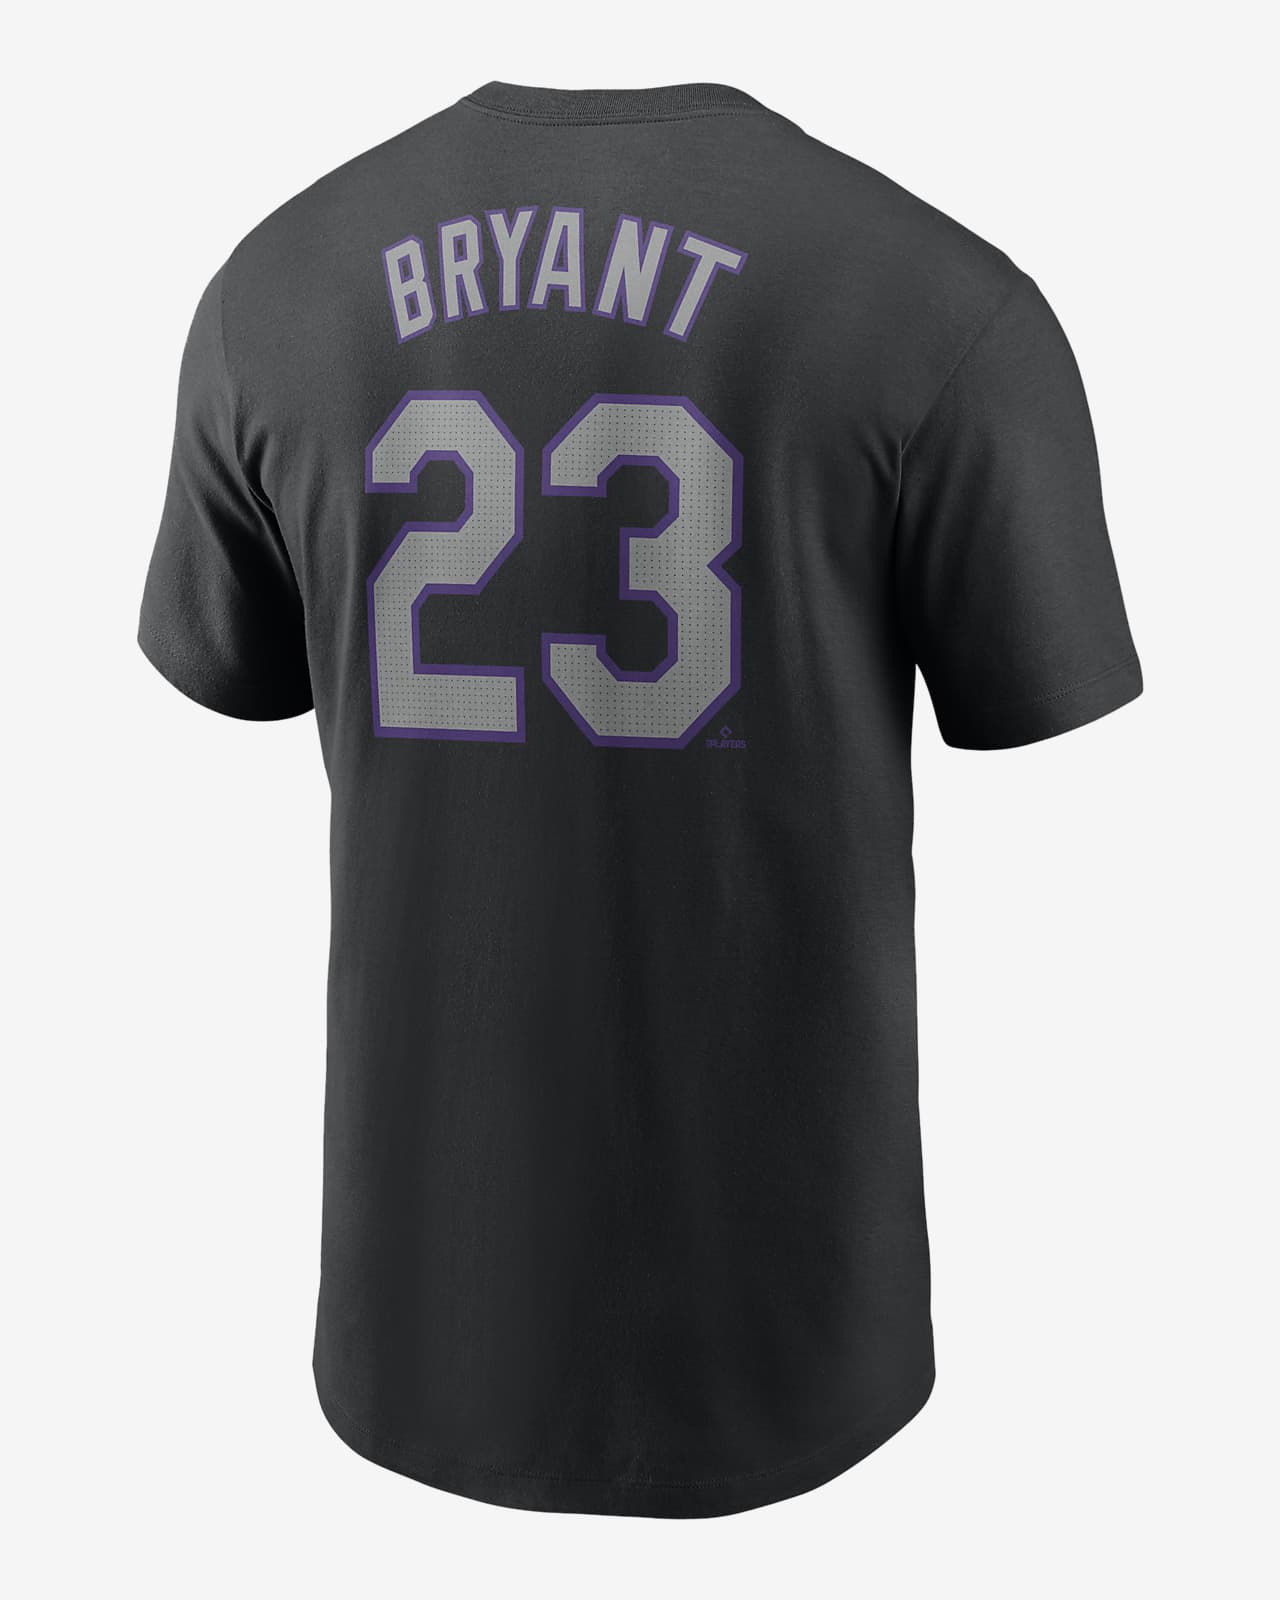 Kris Bryant Colorado Rockies Fuse Men's Nike MLB T-Shirt